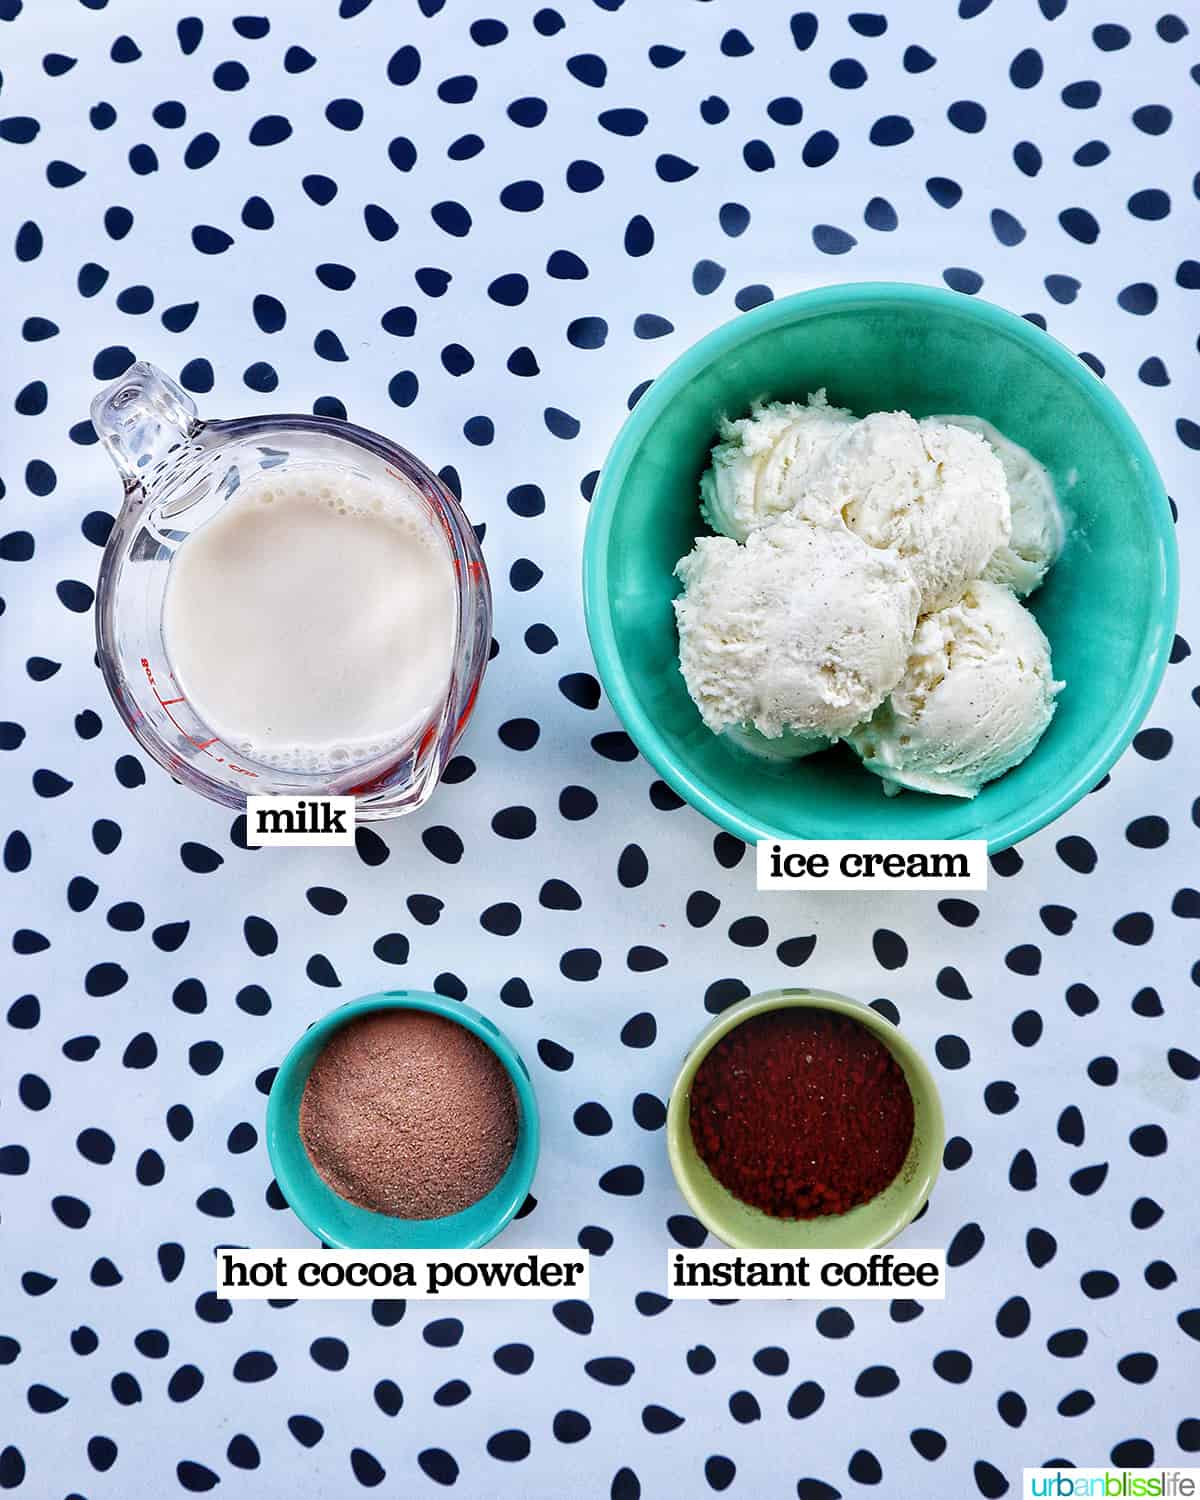 bowls of ingredients to make a coffee milkshake on a polka dot background.